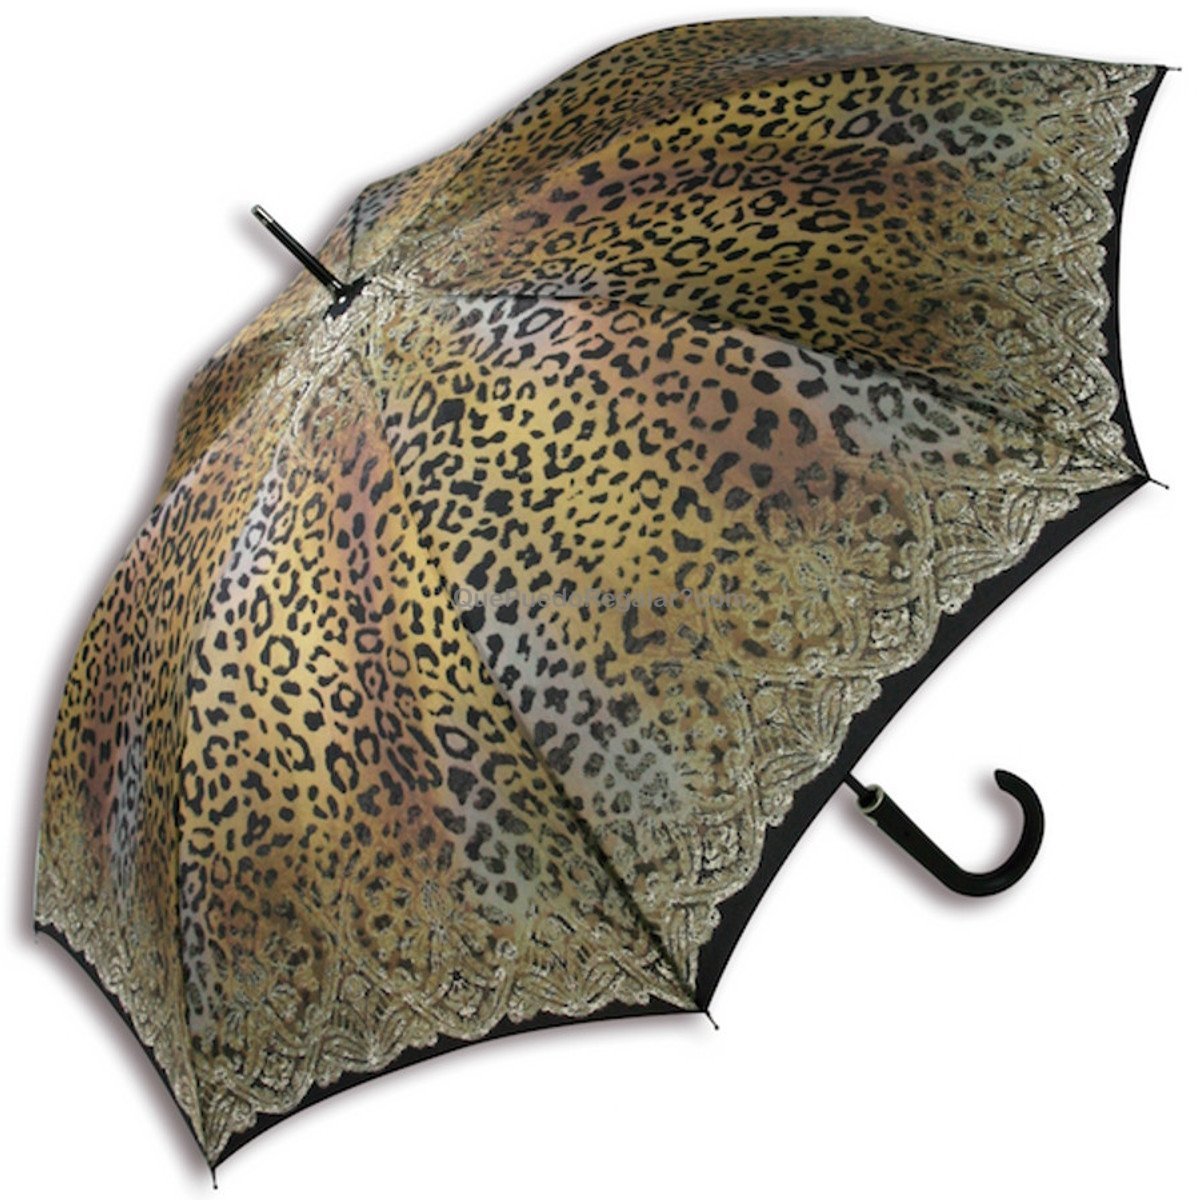 Paraguas Leopardo Elegante - Paraguas largo Mujer, Originales - Que puedo Regalar